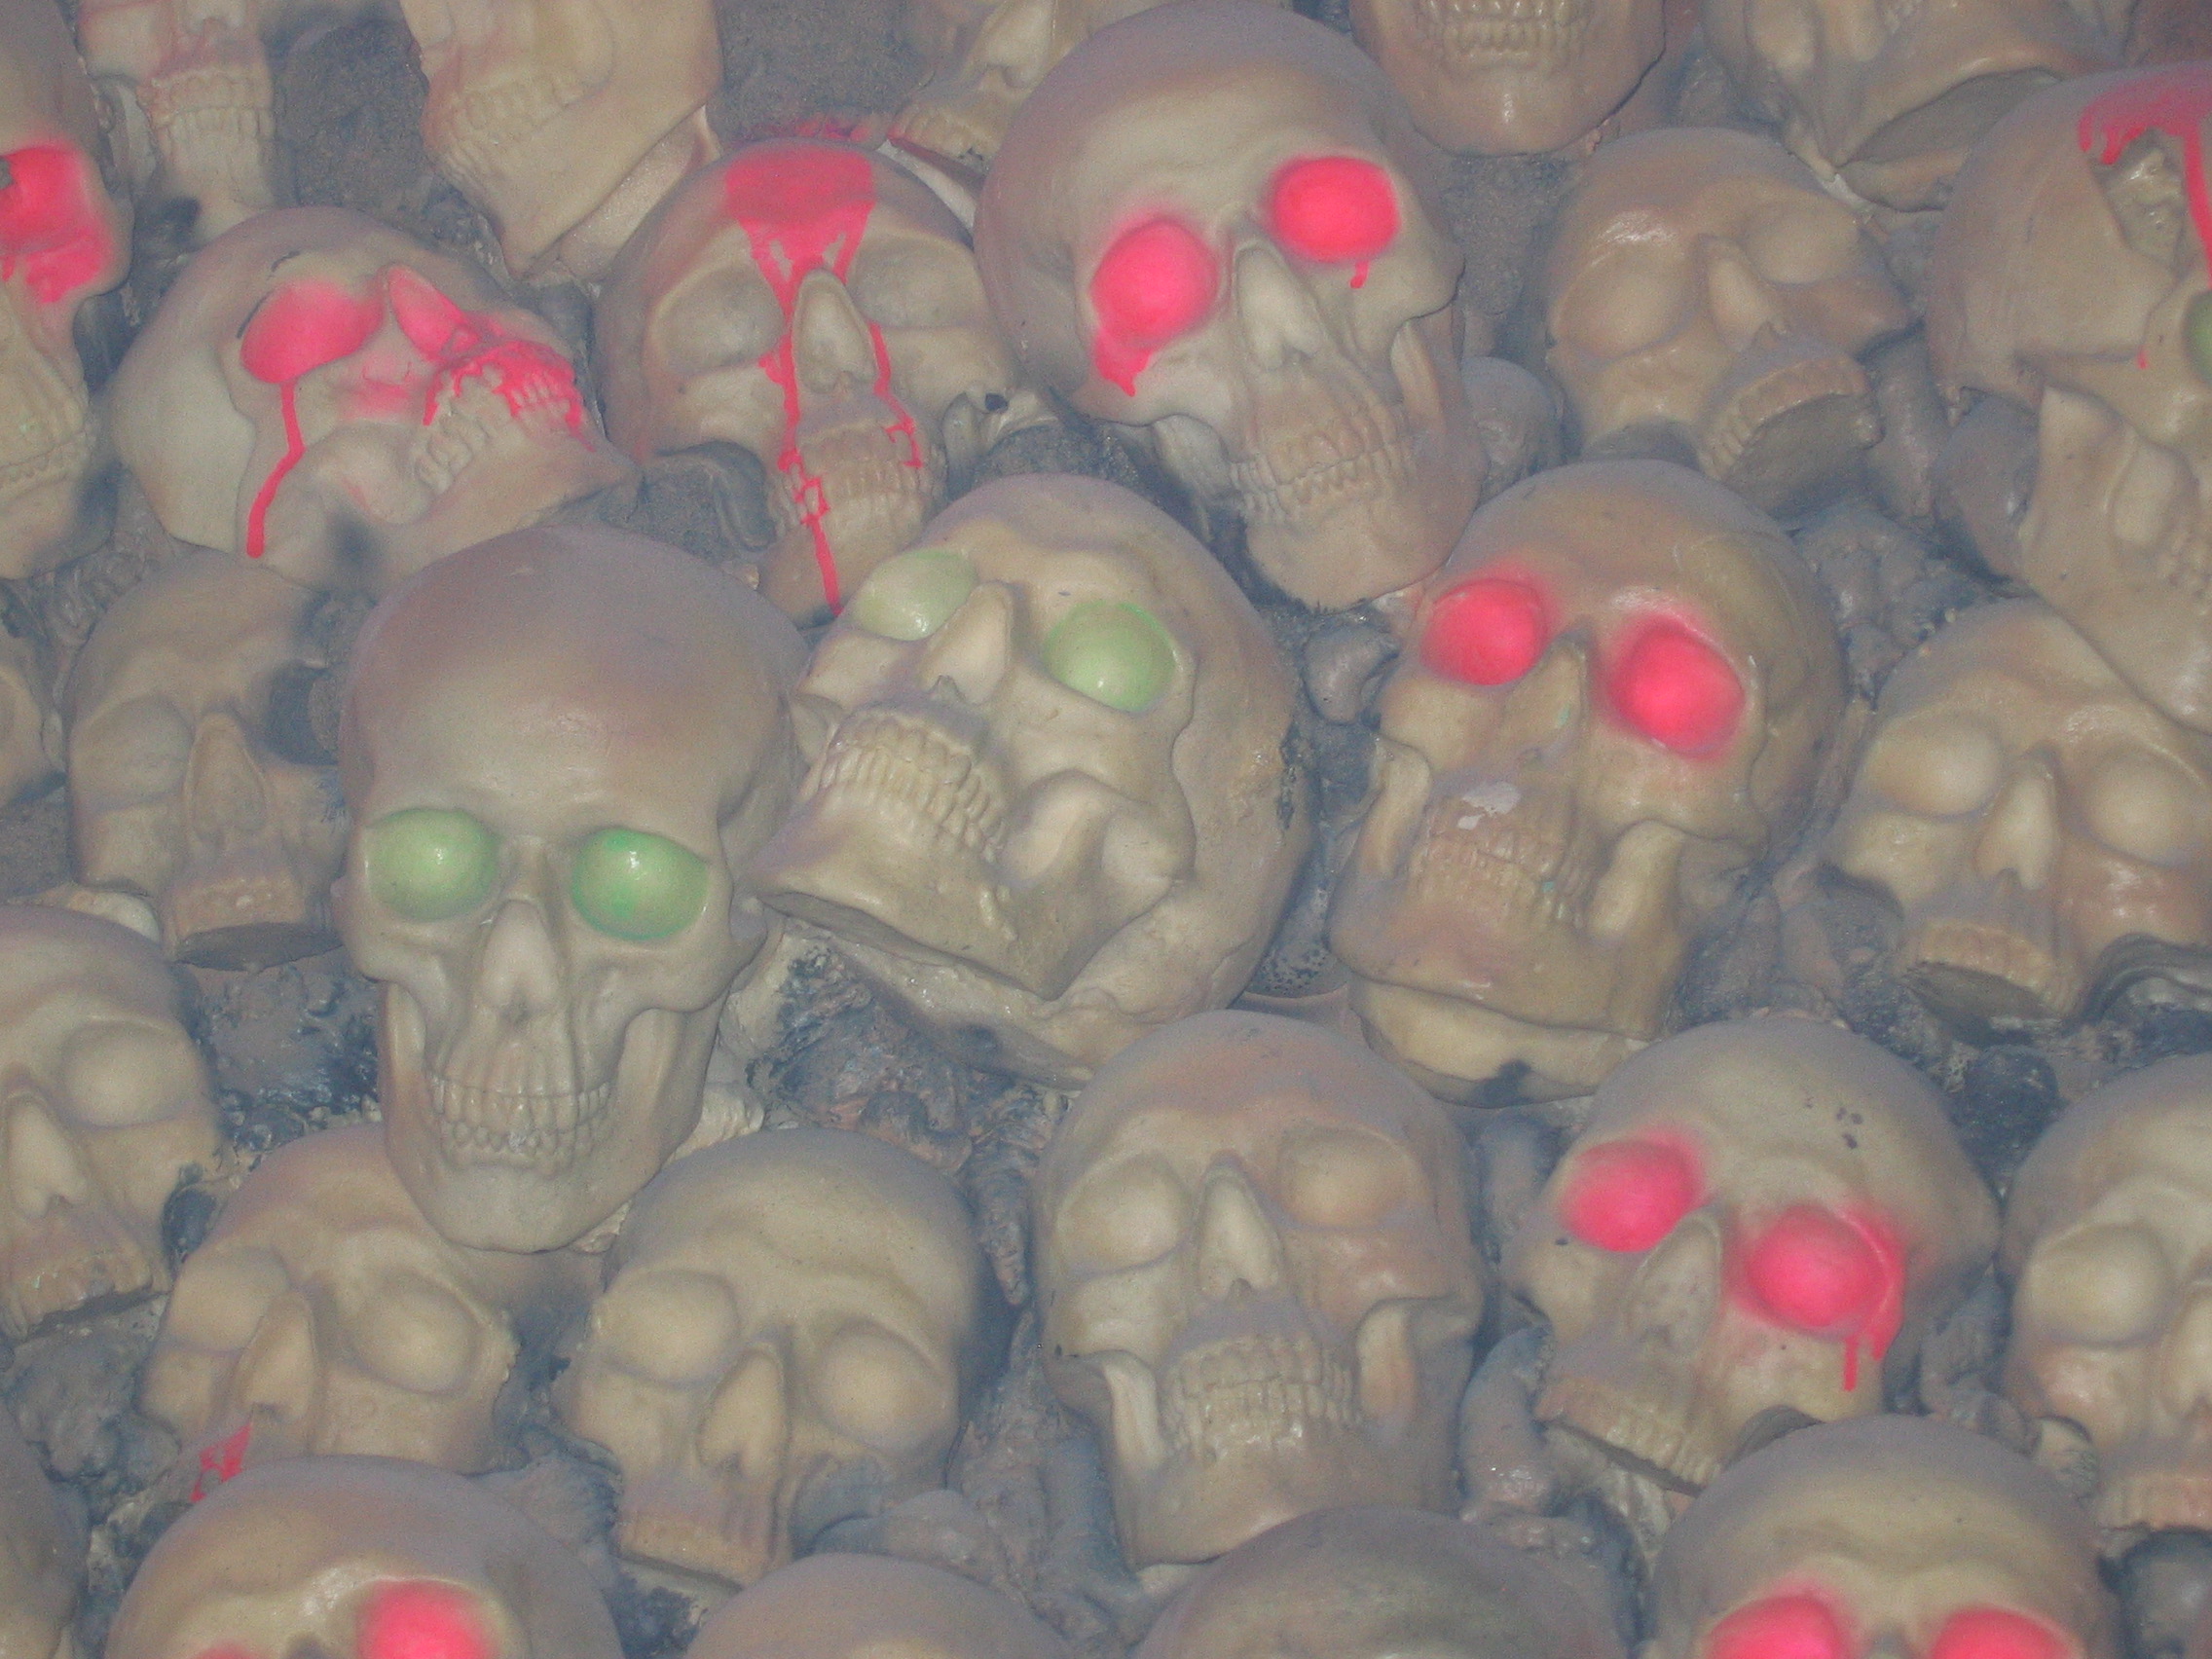 Photo taken by me - skulls at Satan's Hollow night club, Manchester